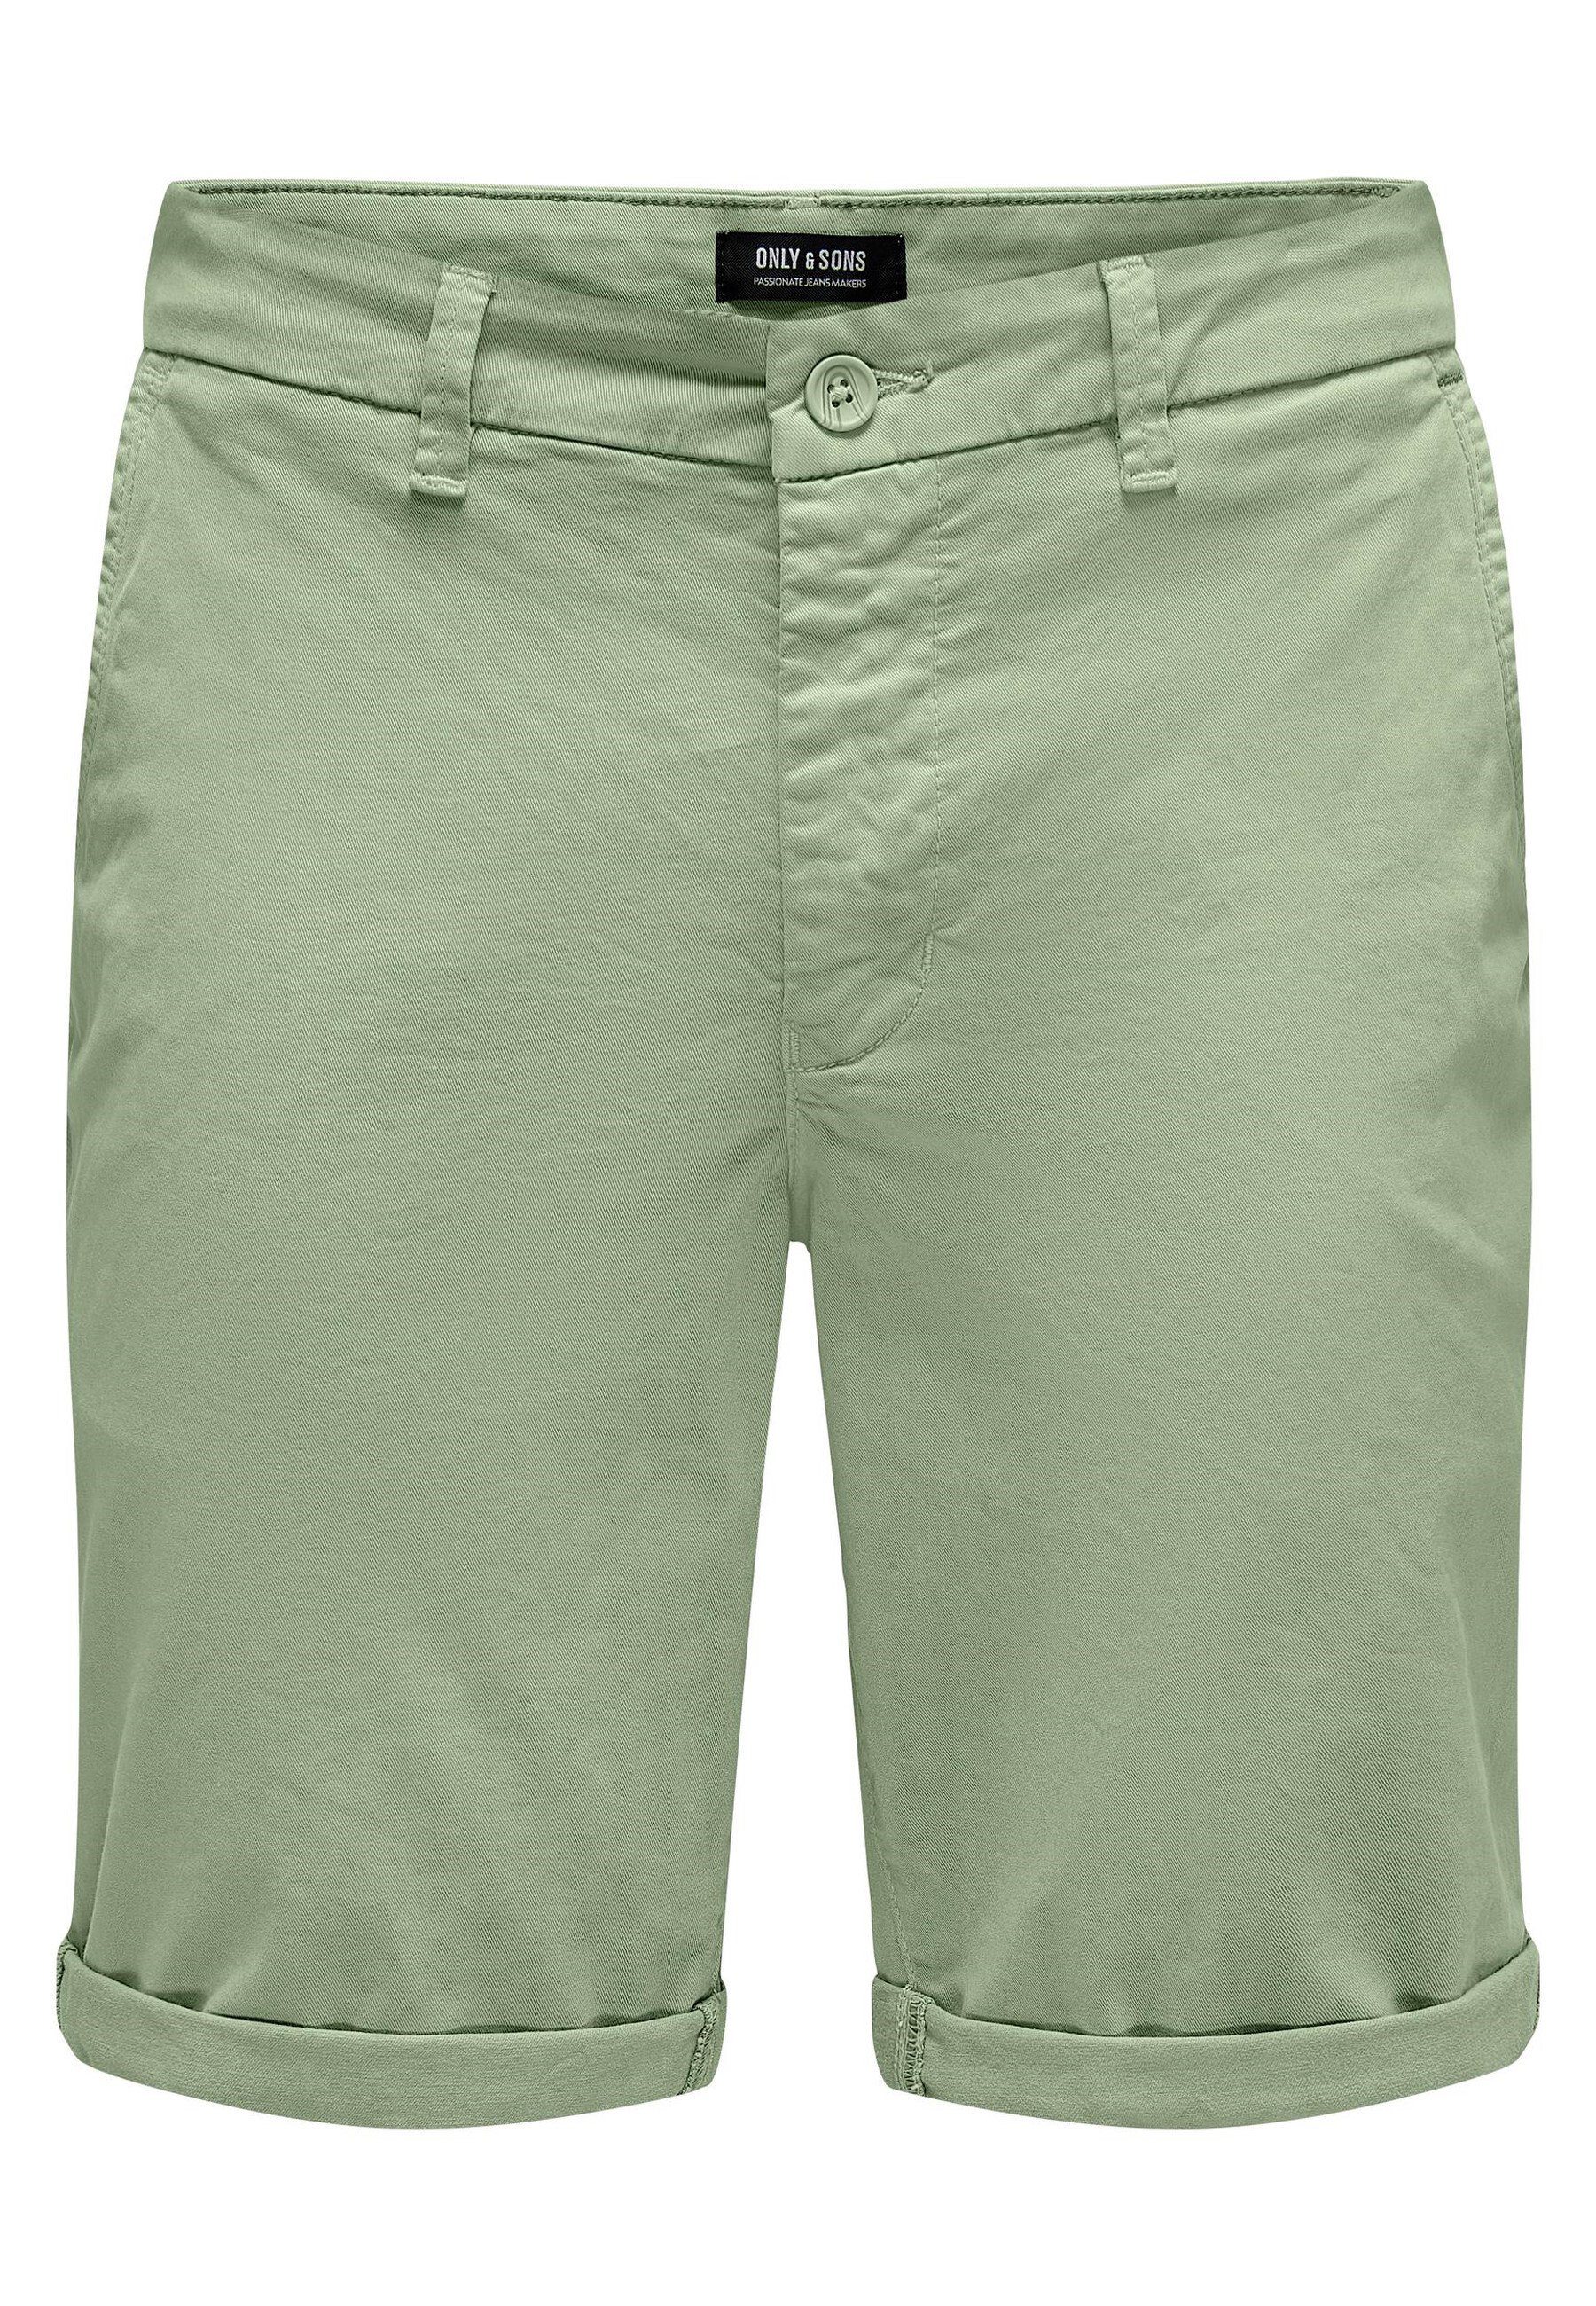 ONLY & SONS Chinoshorts Shorts Unifarbene Short Peter Reg Twill mit grün